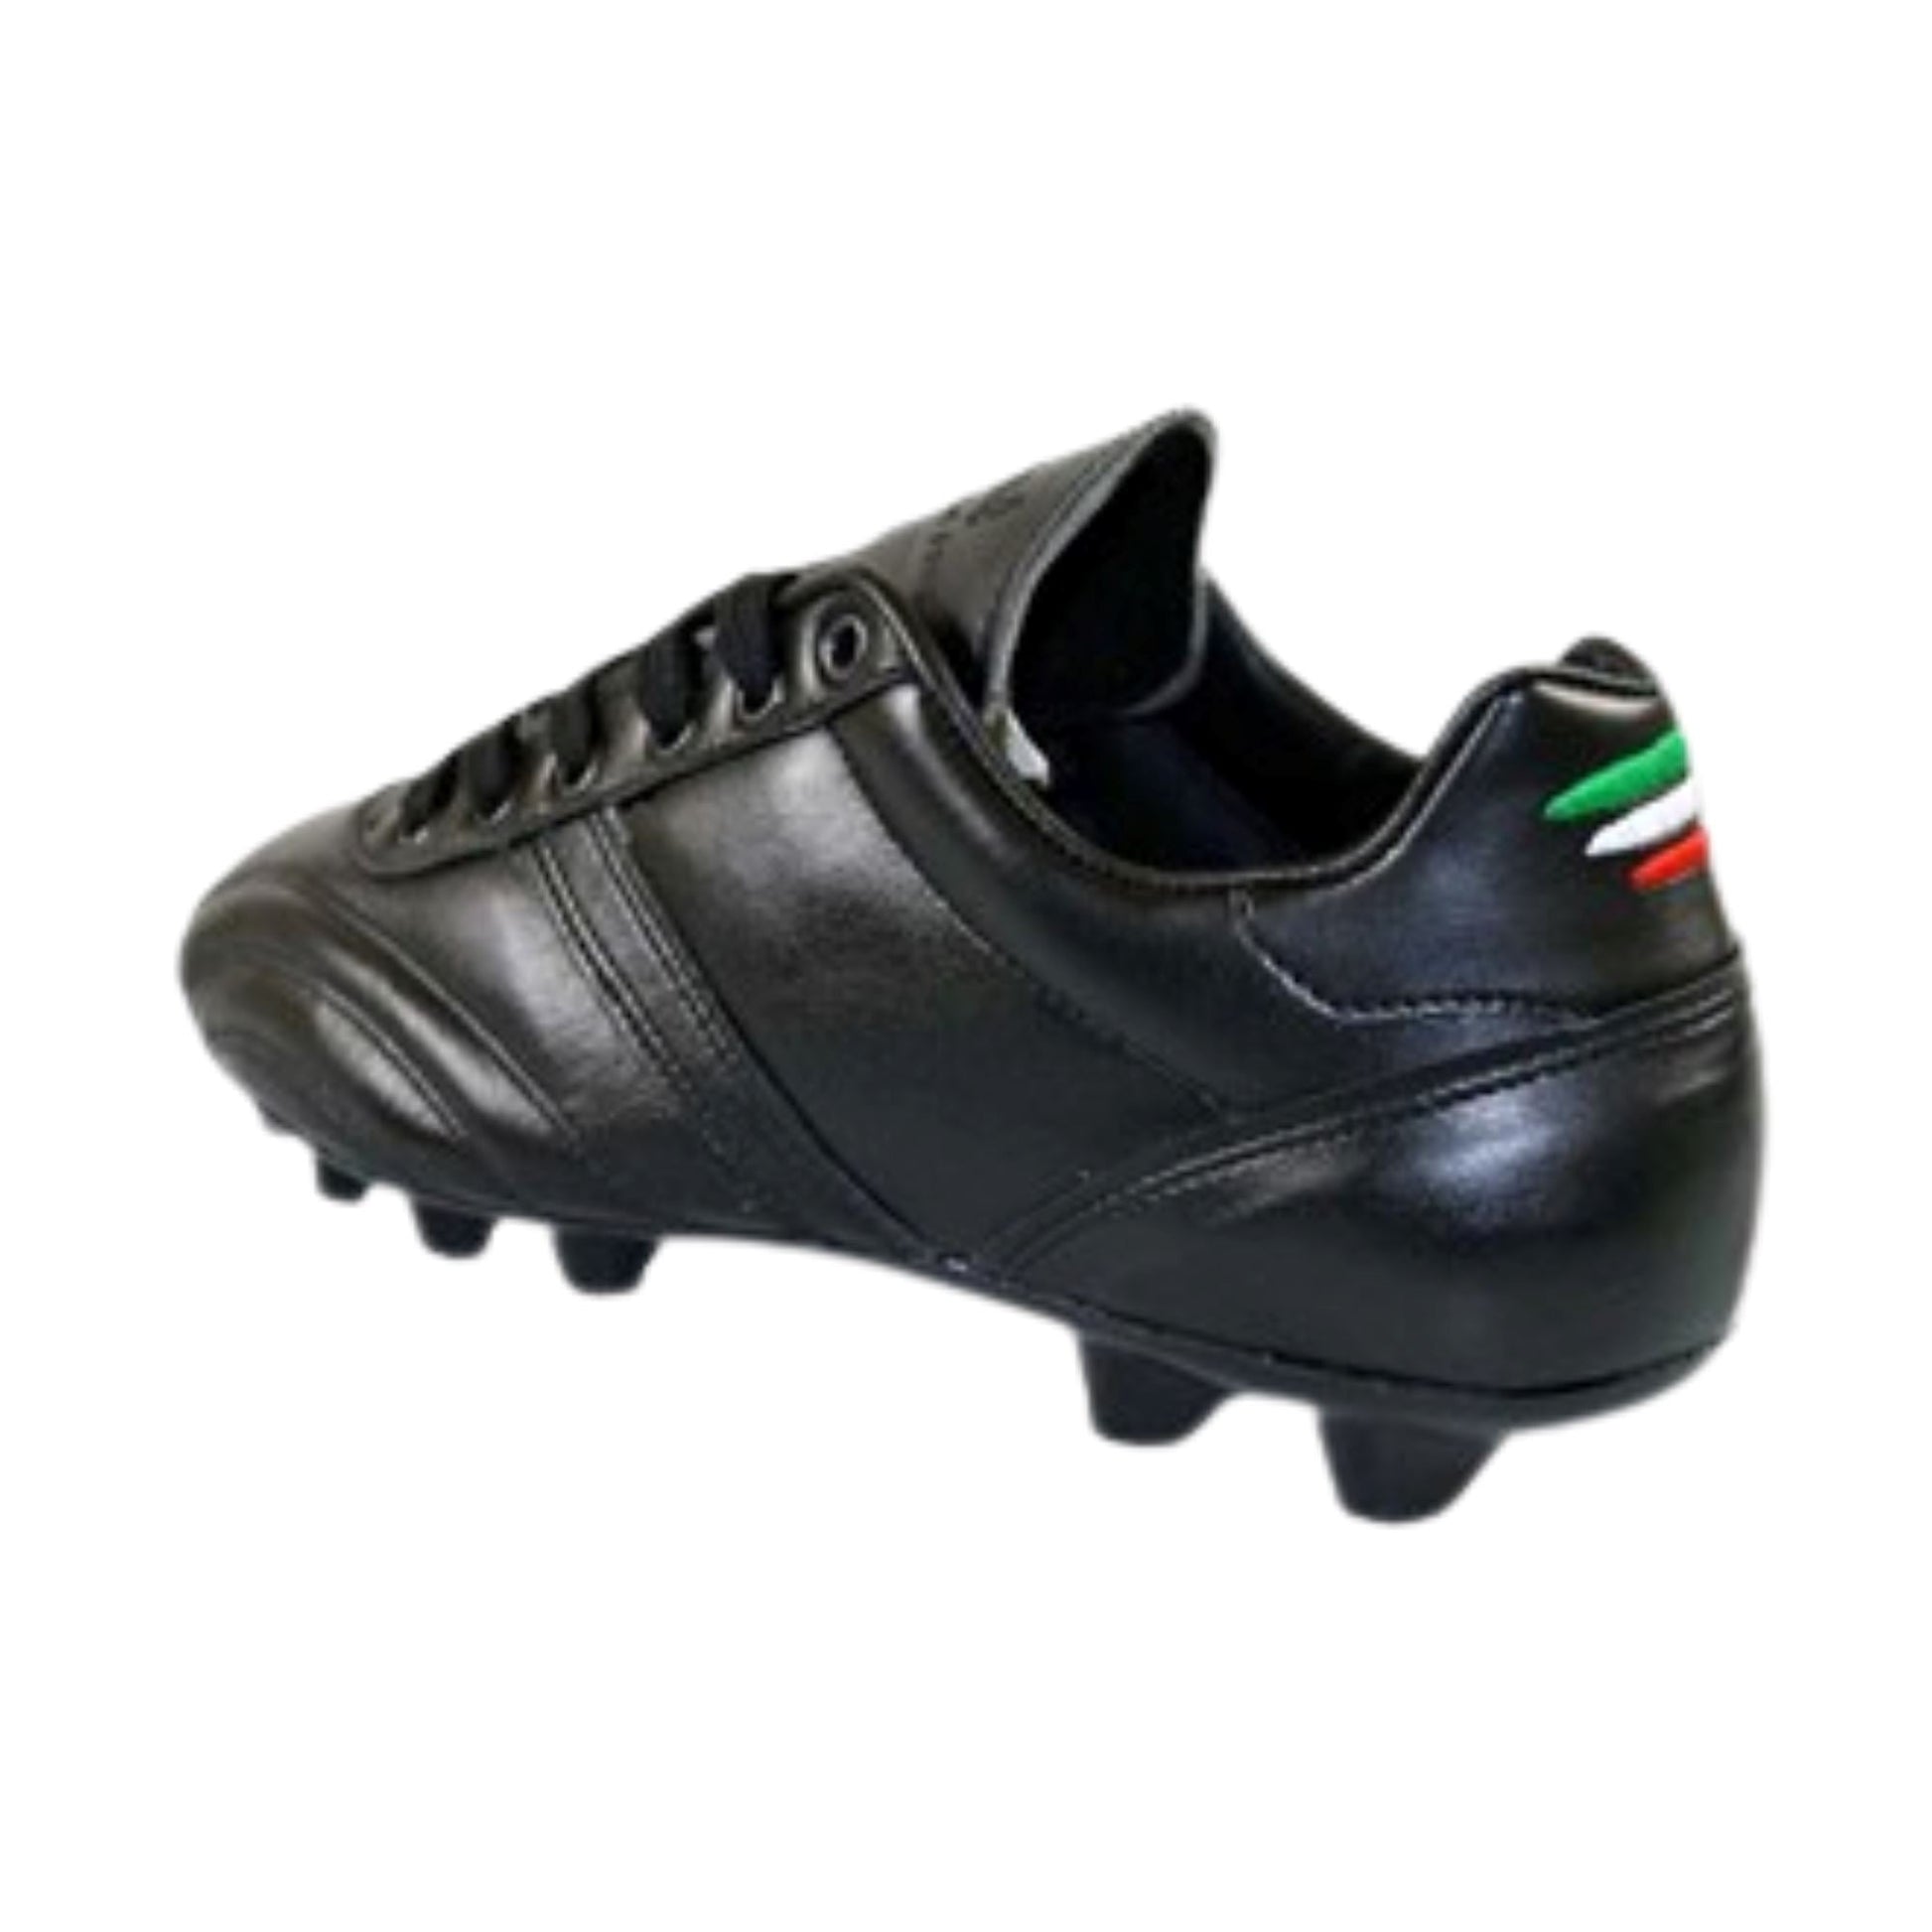 75th Anniversary FG Tech Football Boots by Ryal shoes ITASPORT 